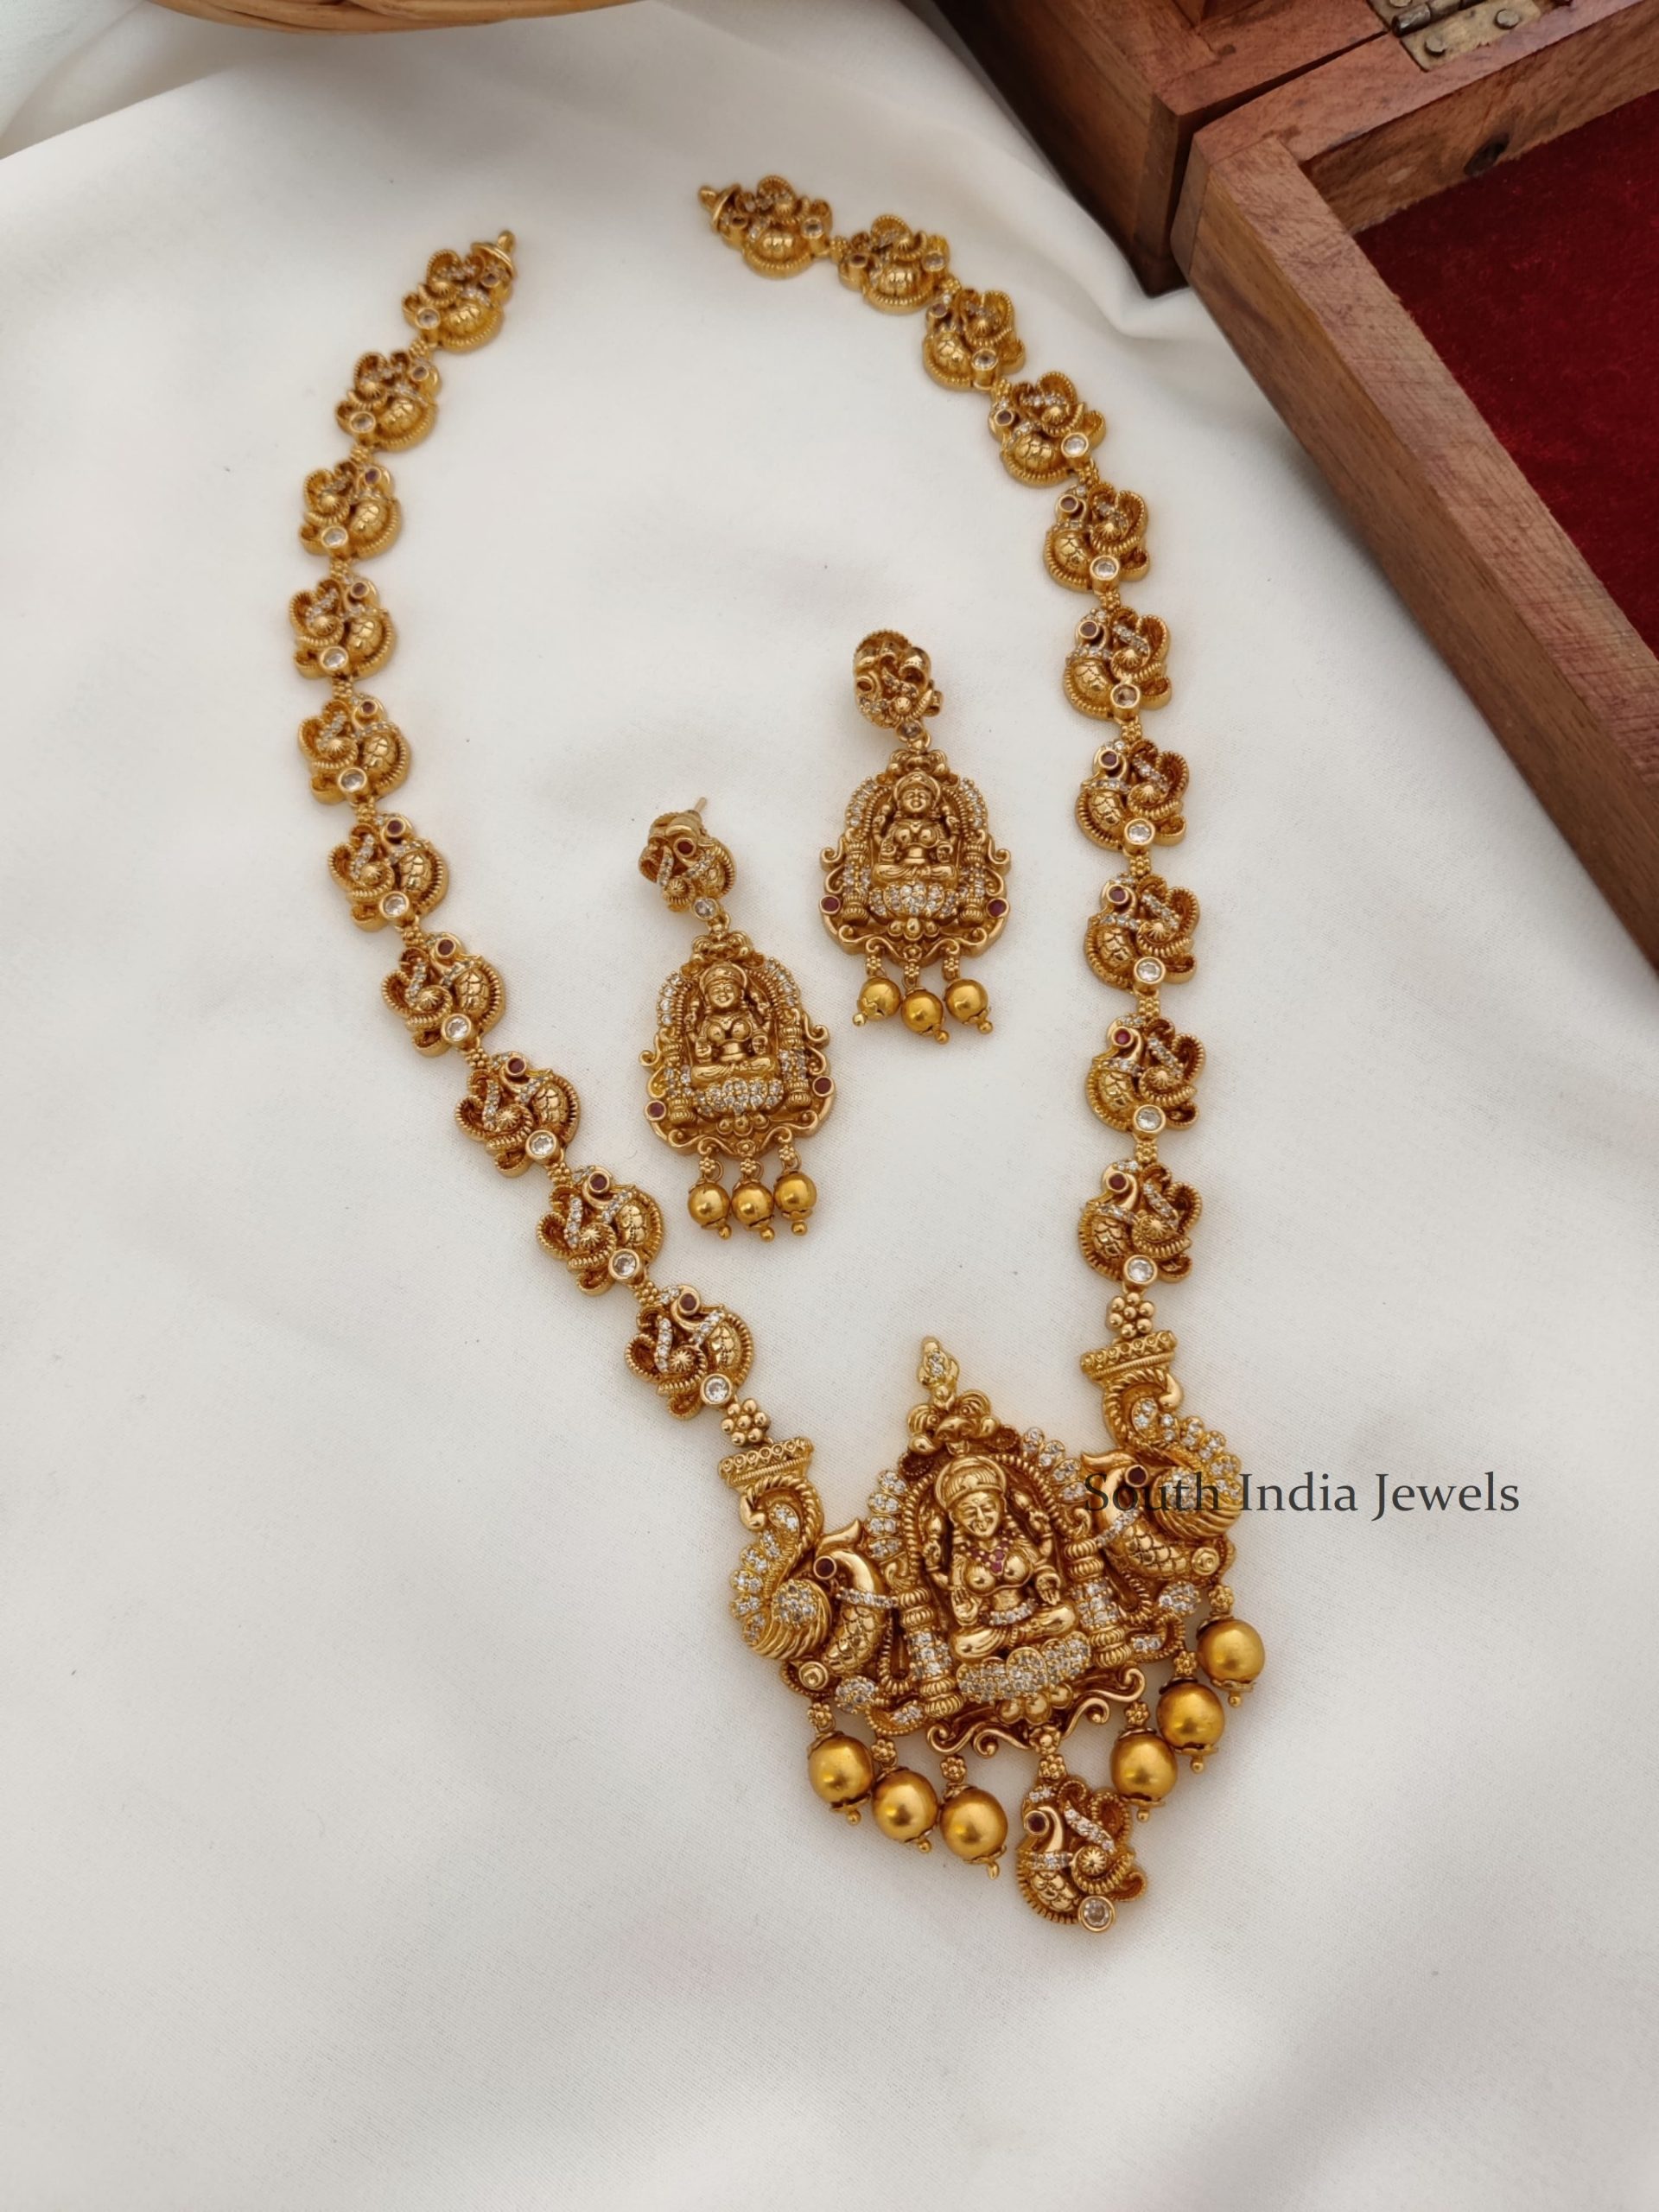 1 gram gold plated jewellery | 1 gram jewellery - South India Jewels